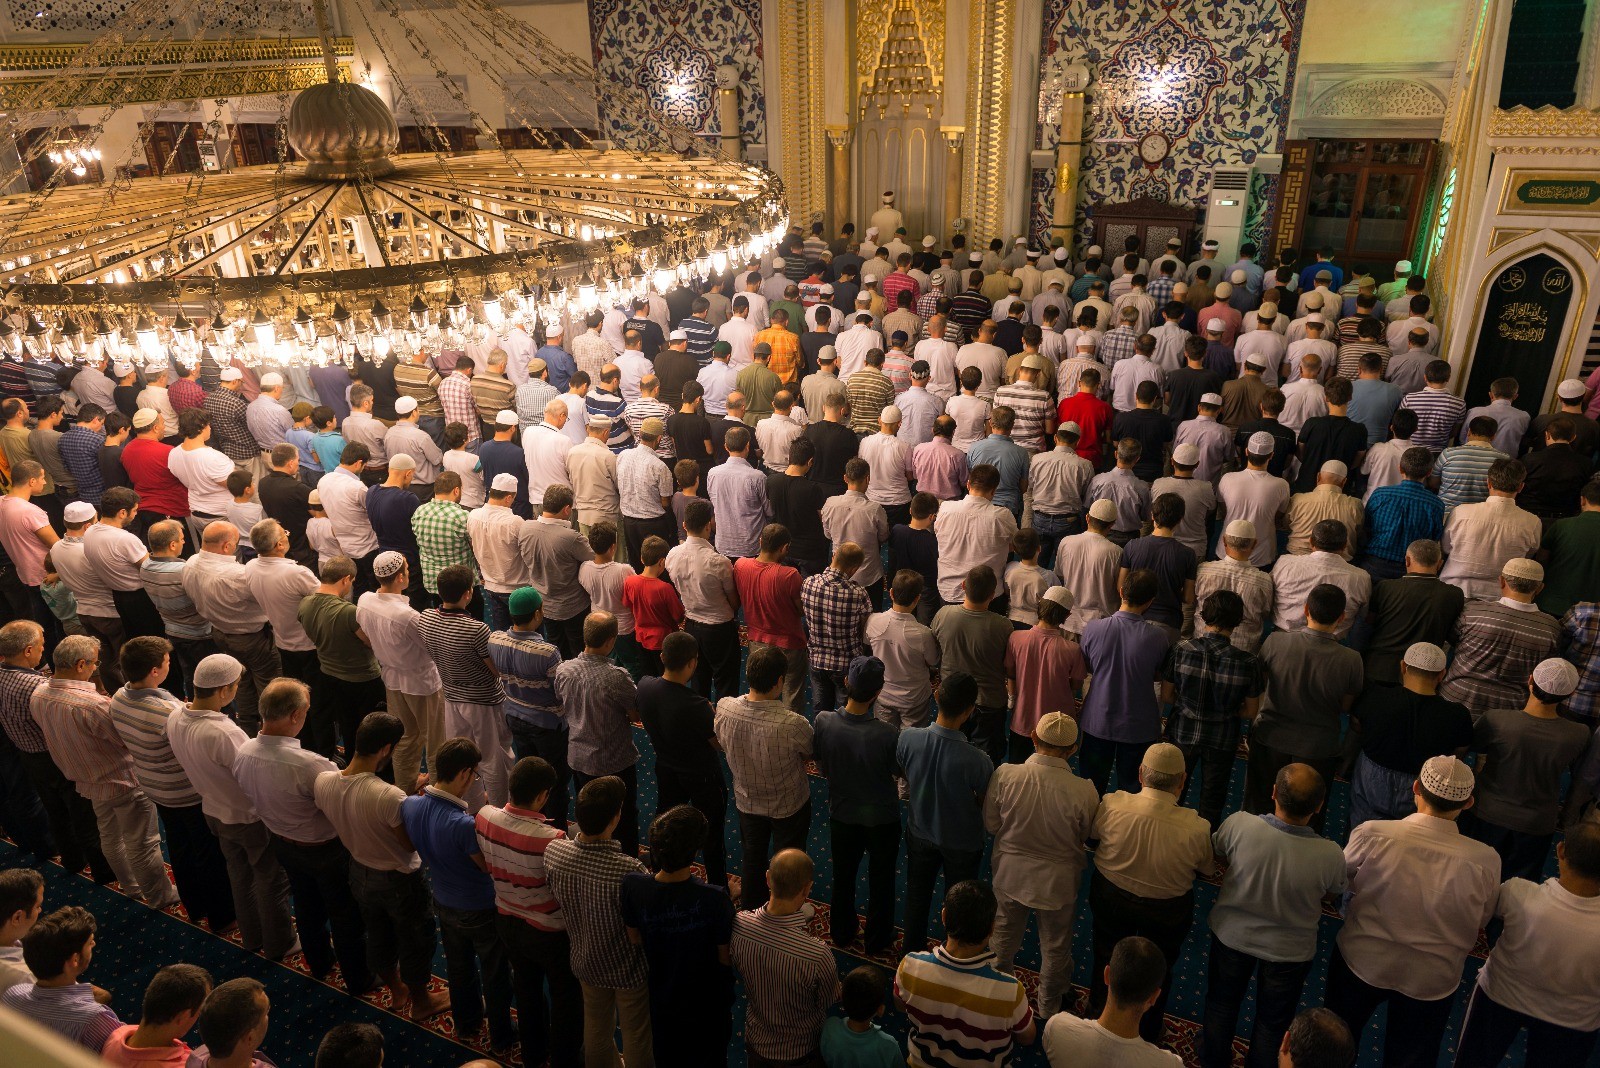 Why Should We Observe Taraweeh Prayer? My Islam Guide